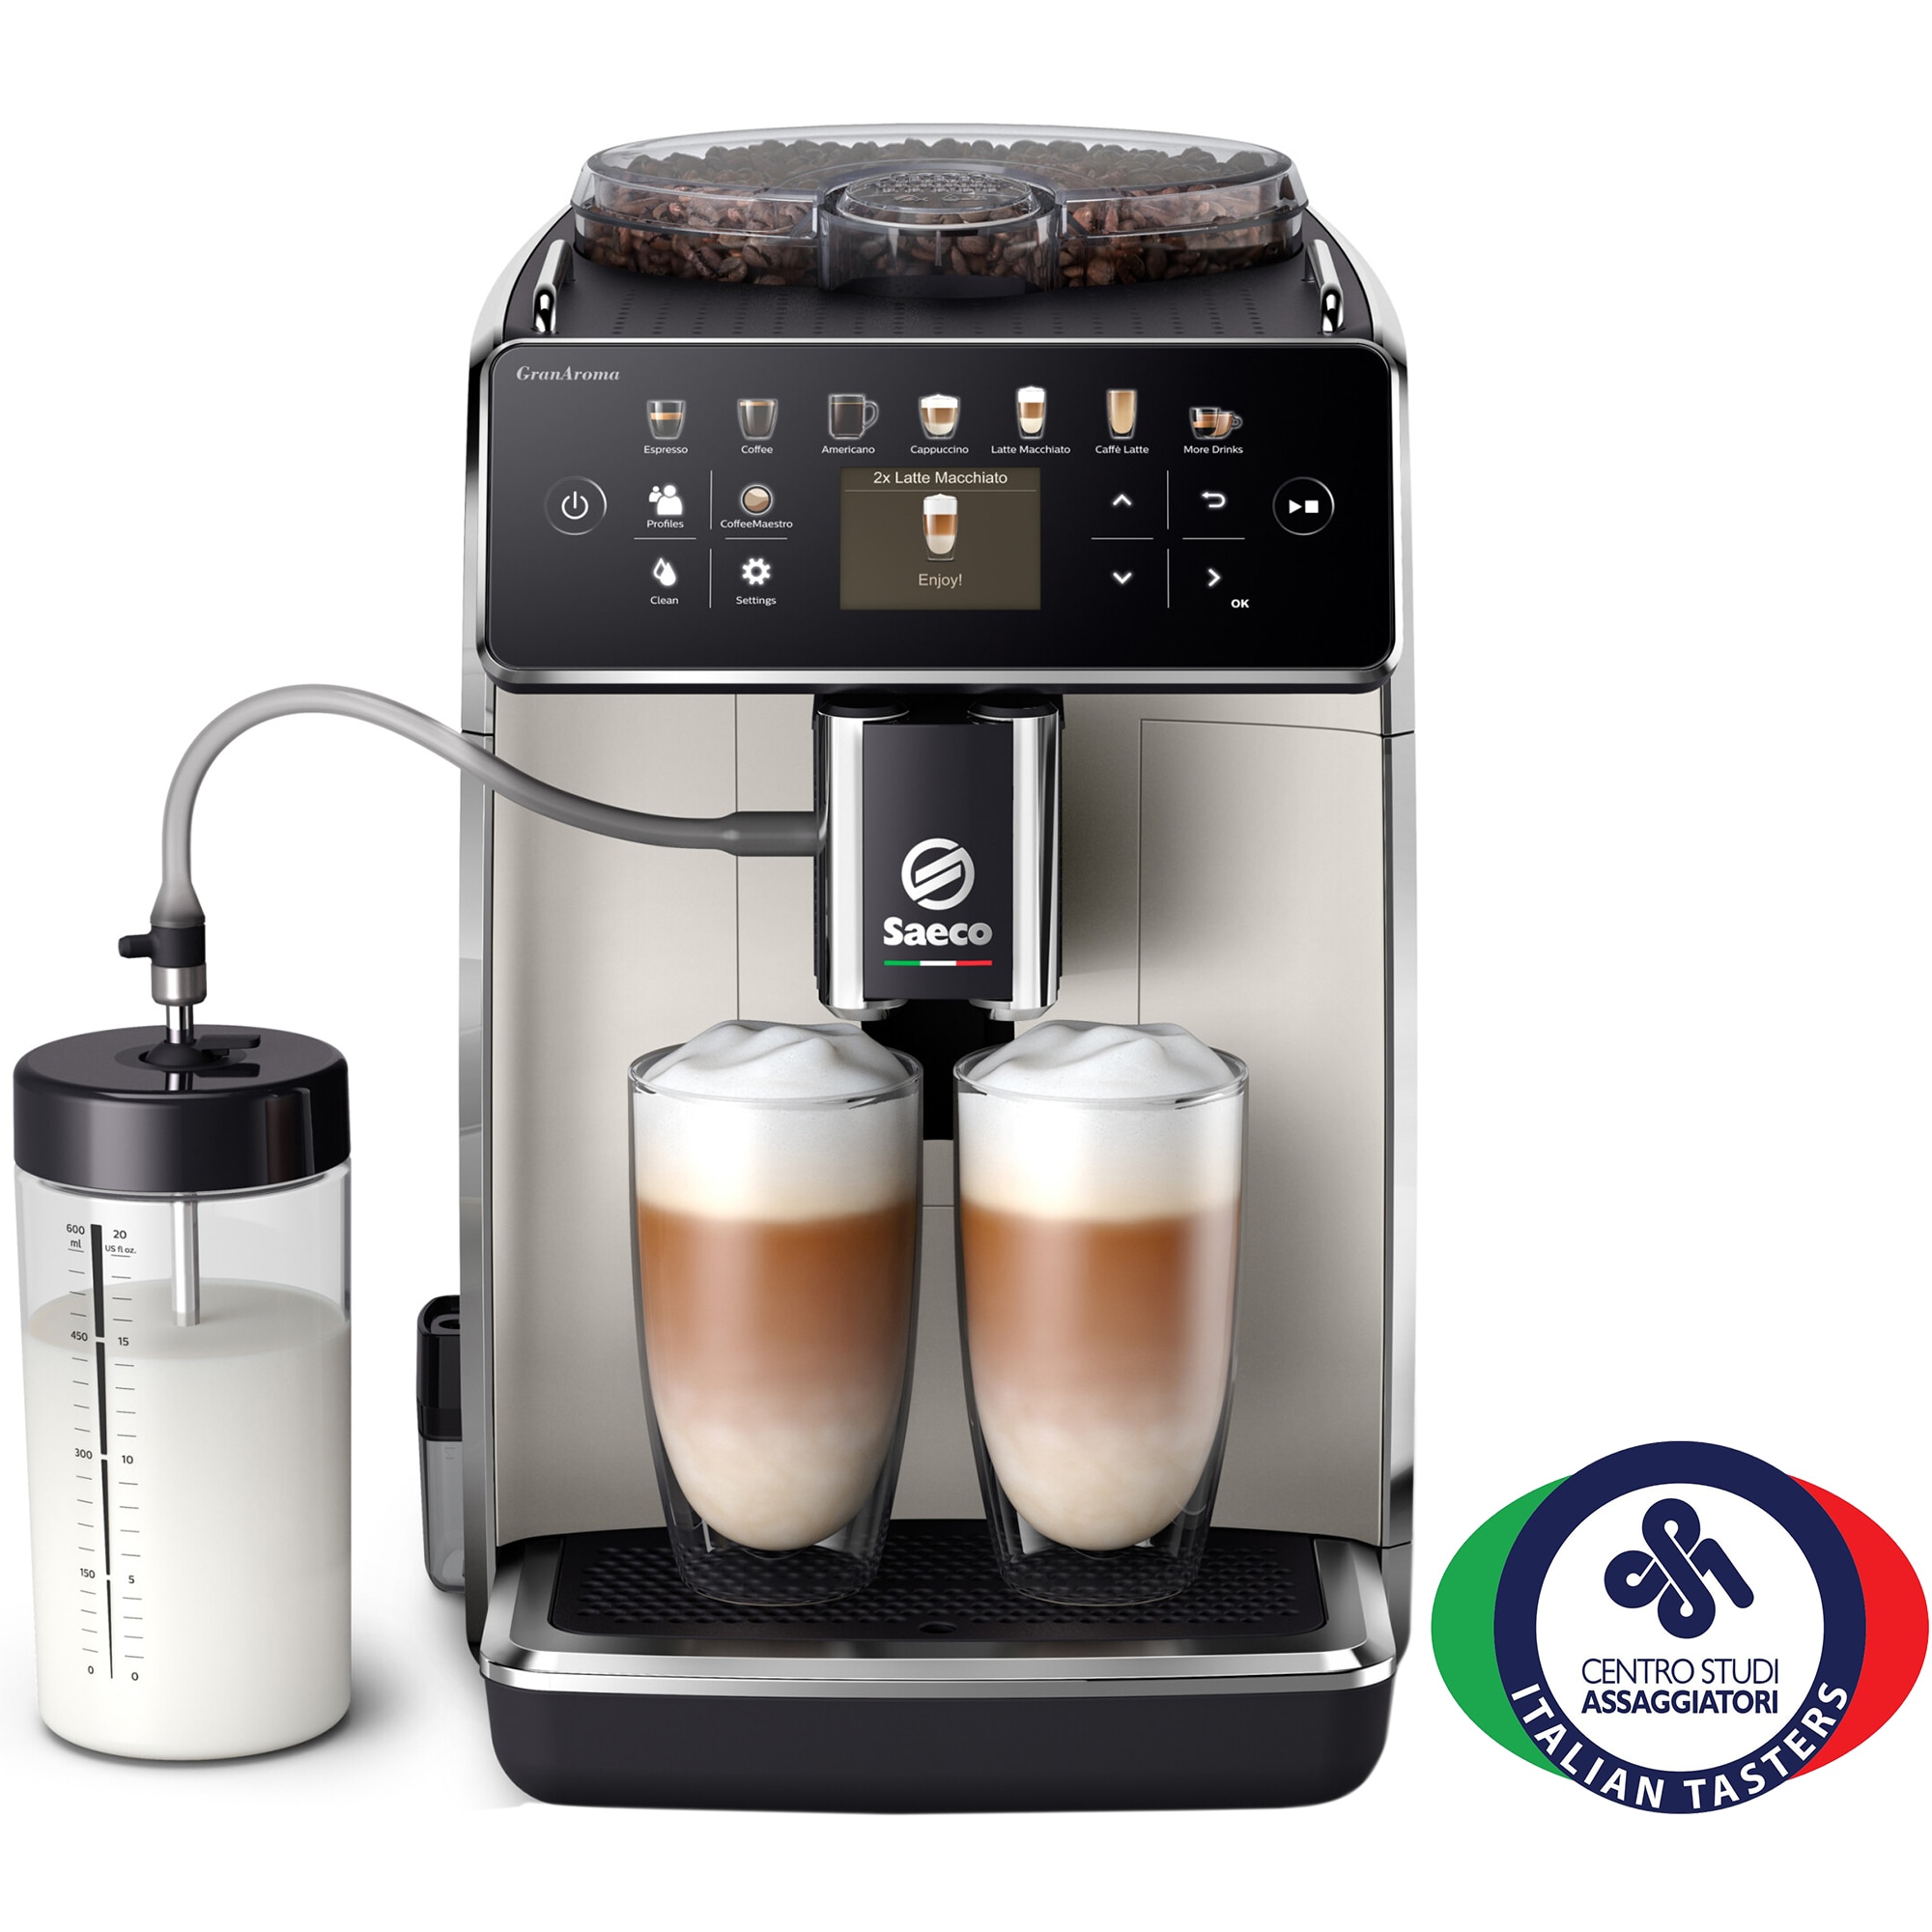 Fotografie Espressor automat Saeco GranAroma SM6582/30, sistem de lapte Latte Duo, 16 bauturi, 15 bar, ecran TFT color, 6 profiluri utilizator, filtru AquaClean, rasnita ceramica, functie DoubleShot, Crem metalic